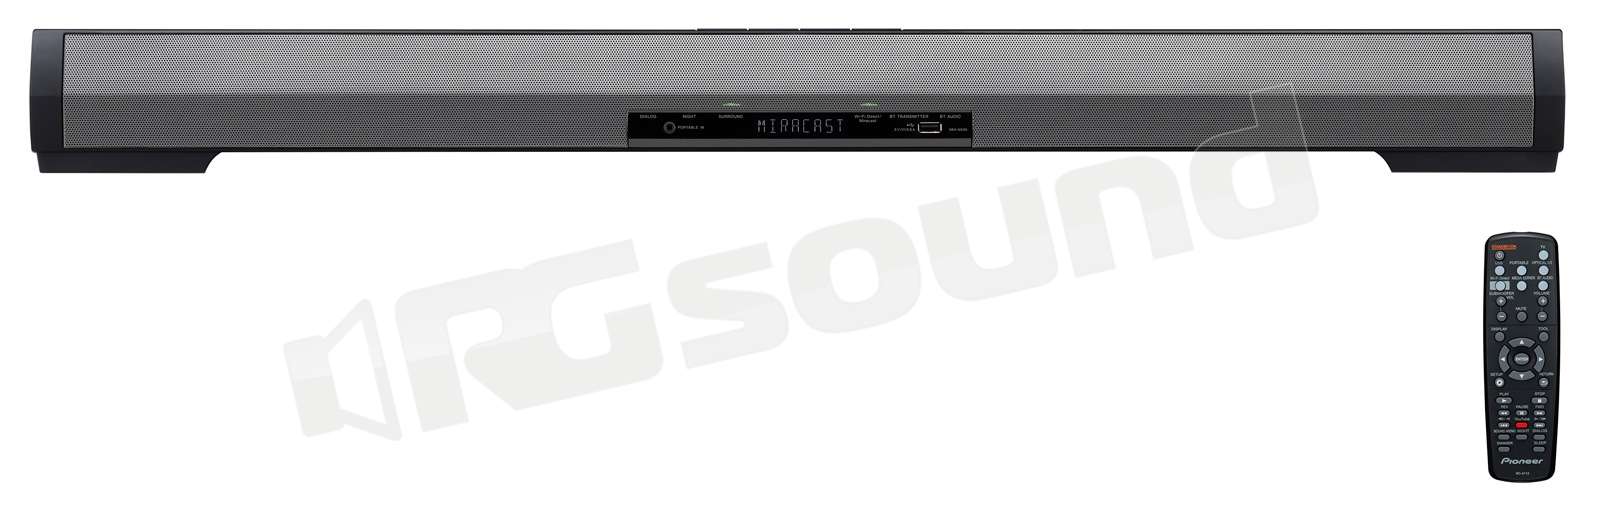 Kent sløjfe fryser Pioneer SBX-N500 | Diffusori Home e Home Theatre - Diffusori audio Wi